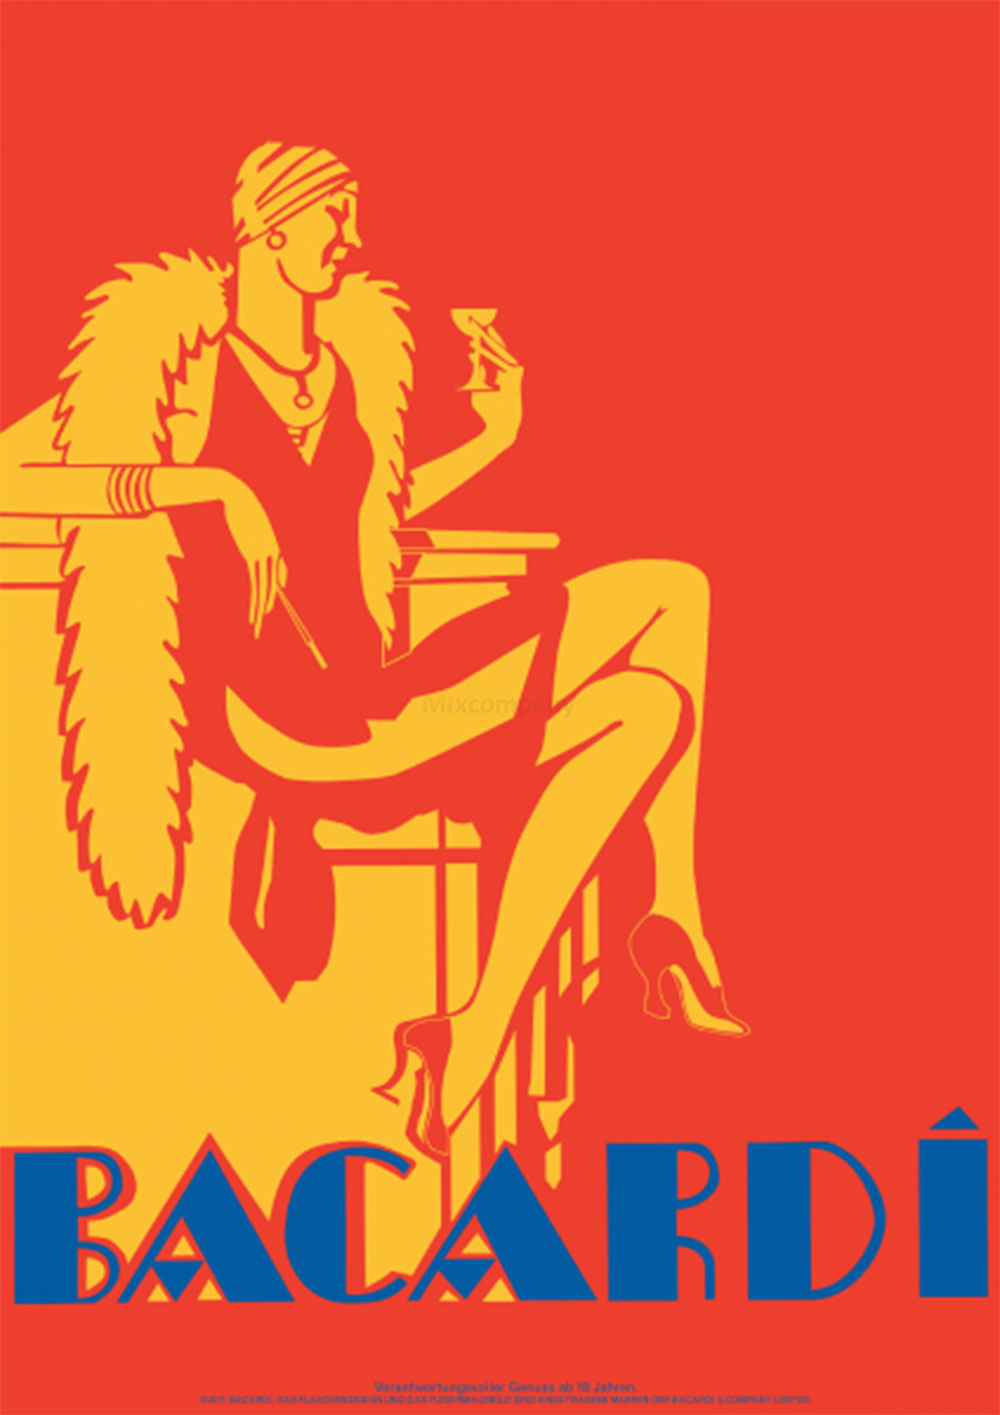 Bacardi Schuber Geschenkset - Bacardi Carta Blanca 0,7l 700ml (37,5% Vol) + 2x Coca Cola 200ml + 2x Bacardi Gläser - Inkl. Pfand MEHRWEG